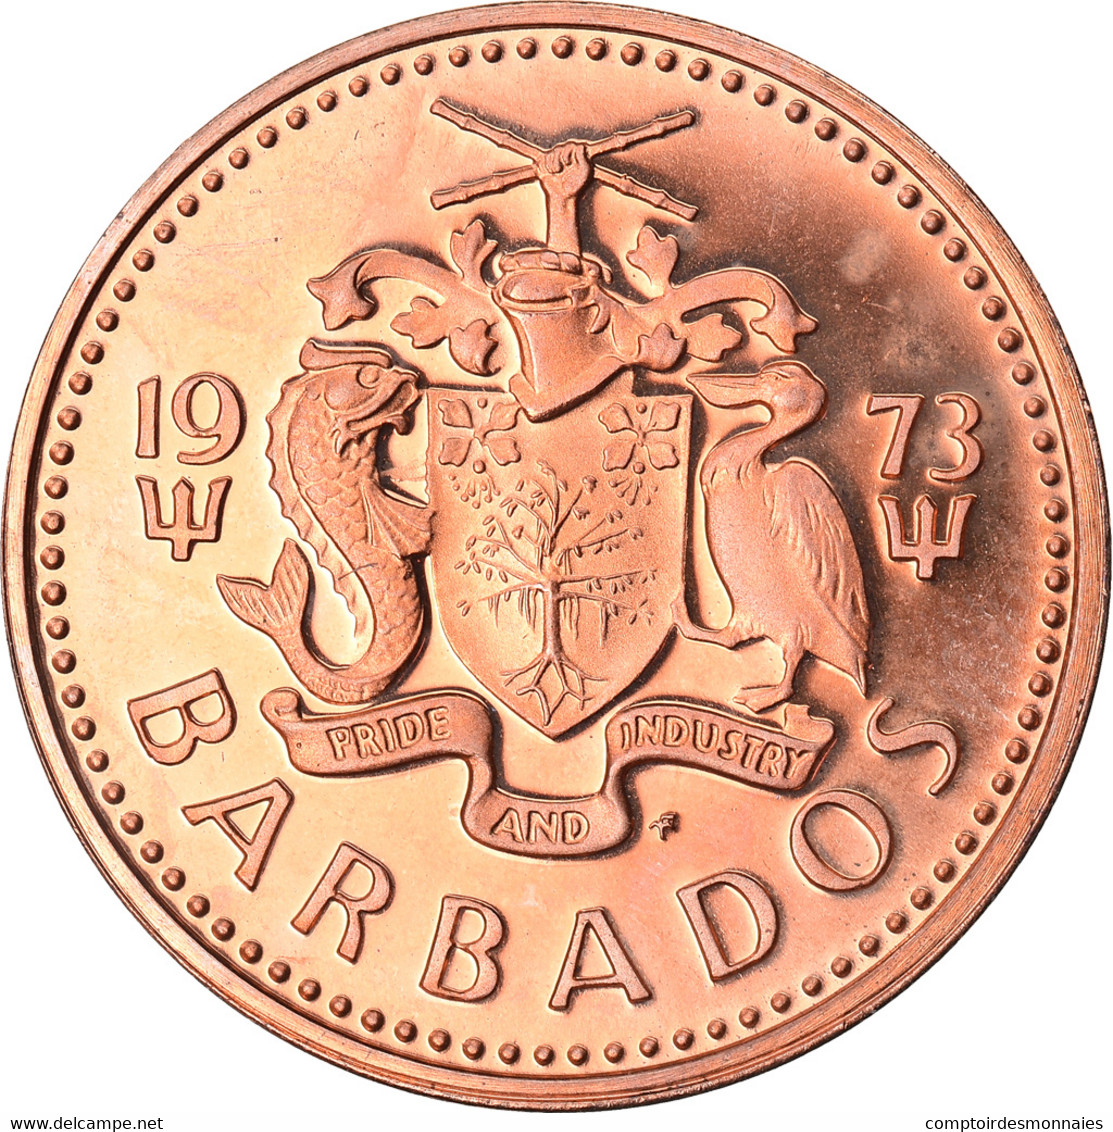 Monnaie, Barbados, Cent, 1973, Franklin Mint, FDC, Bronze, KM:10 - Barbados (Barbuda)